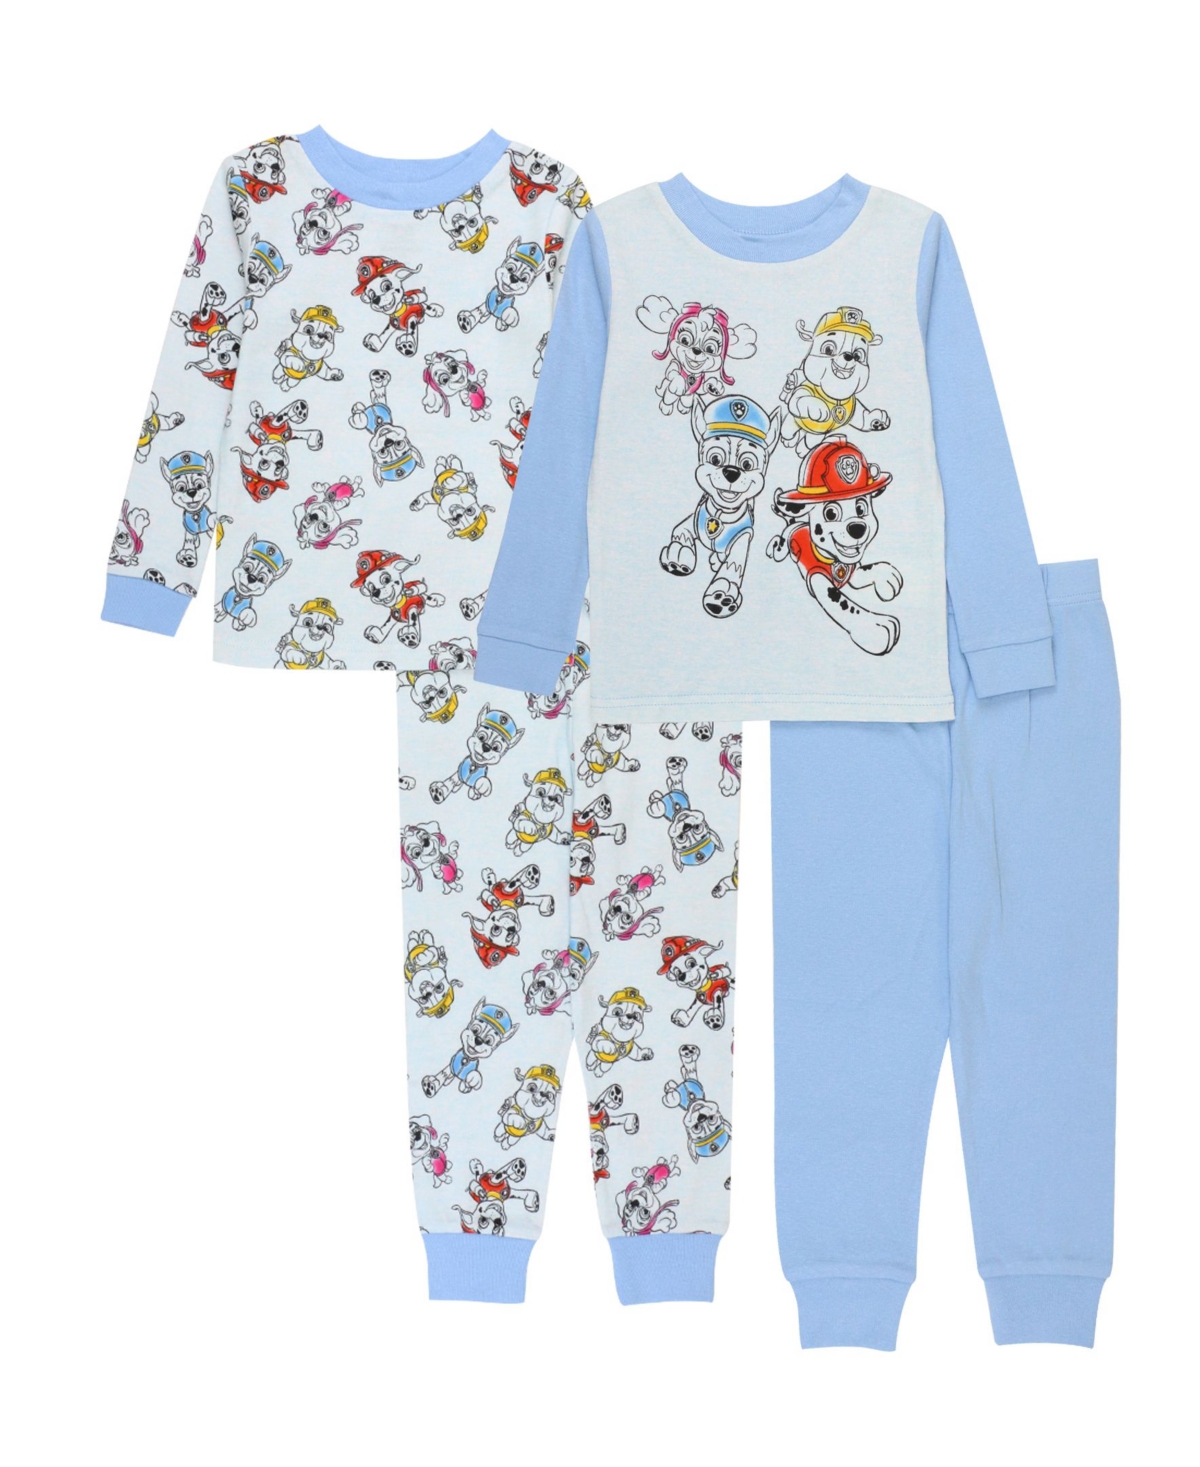 Ame Toddler Boys Paw Patrol Pajamas, 4 Piece Set In Assorted